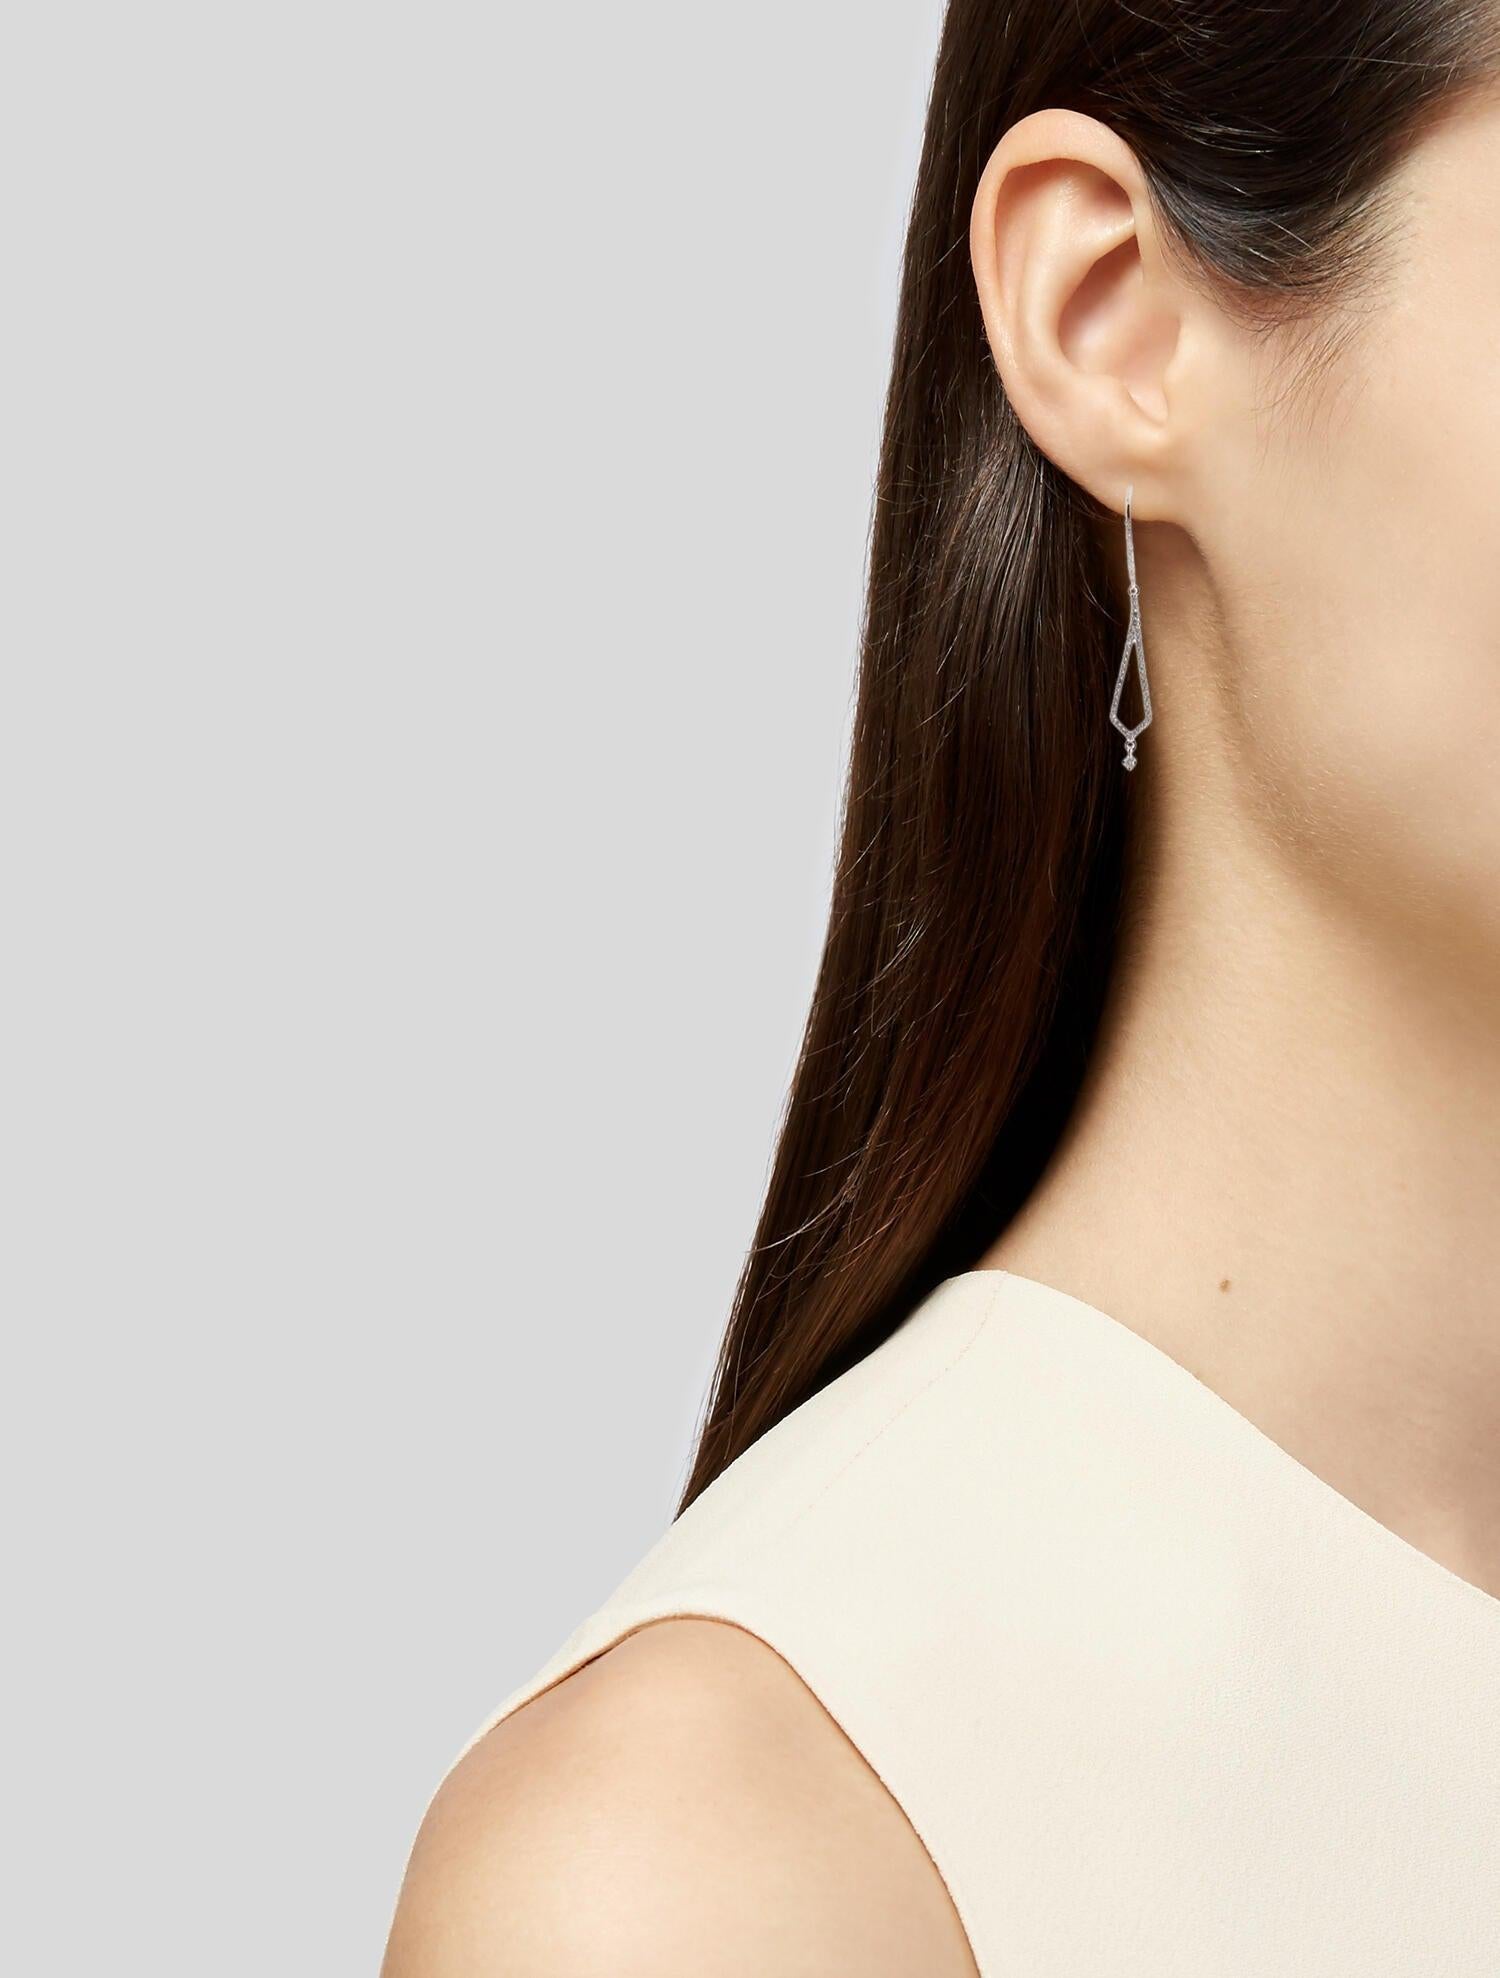 Women's 14K Diamond Drop Earrings - Exquisite Sparkle, Timeless Elegance, Elegant Design For Sale